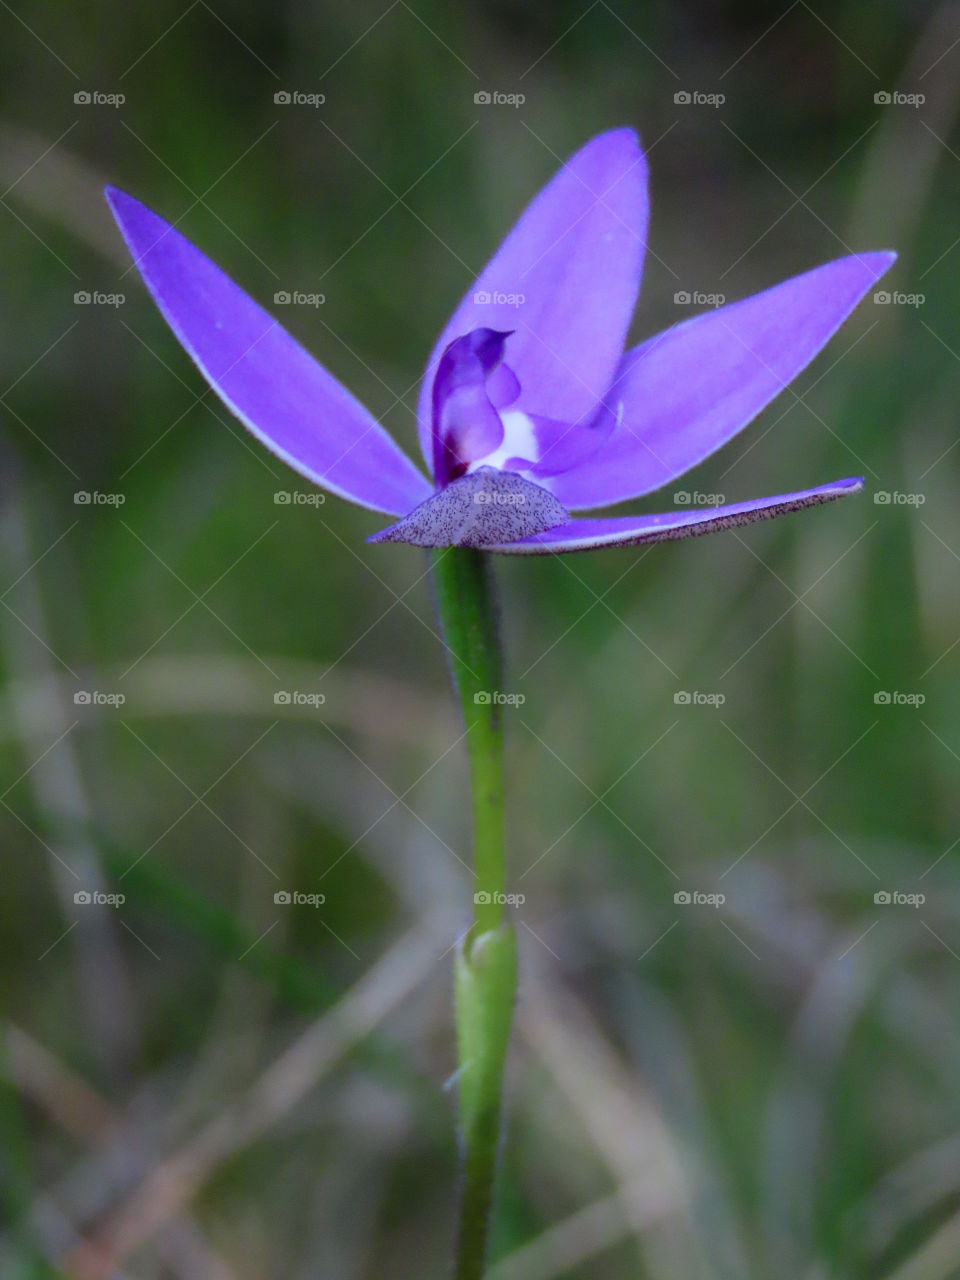 Flower in focus 